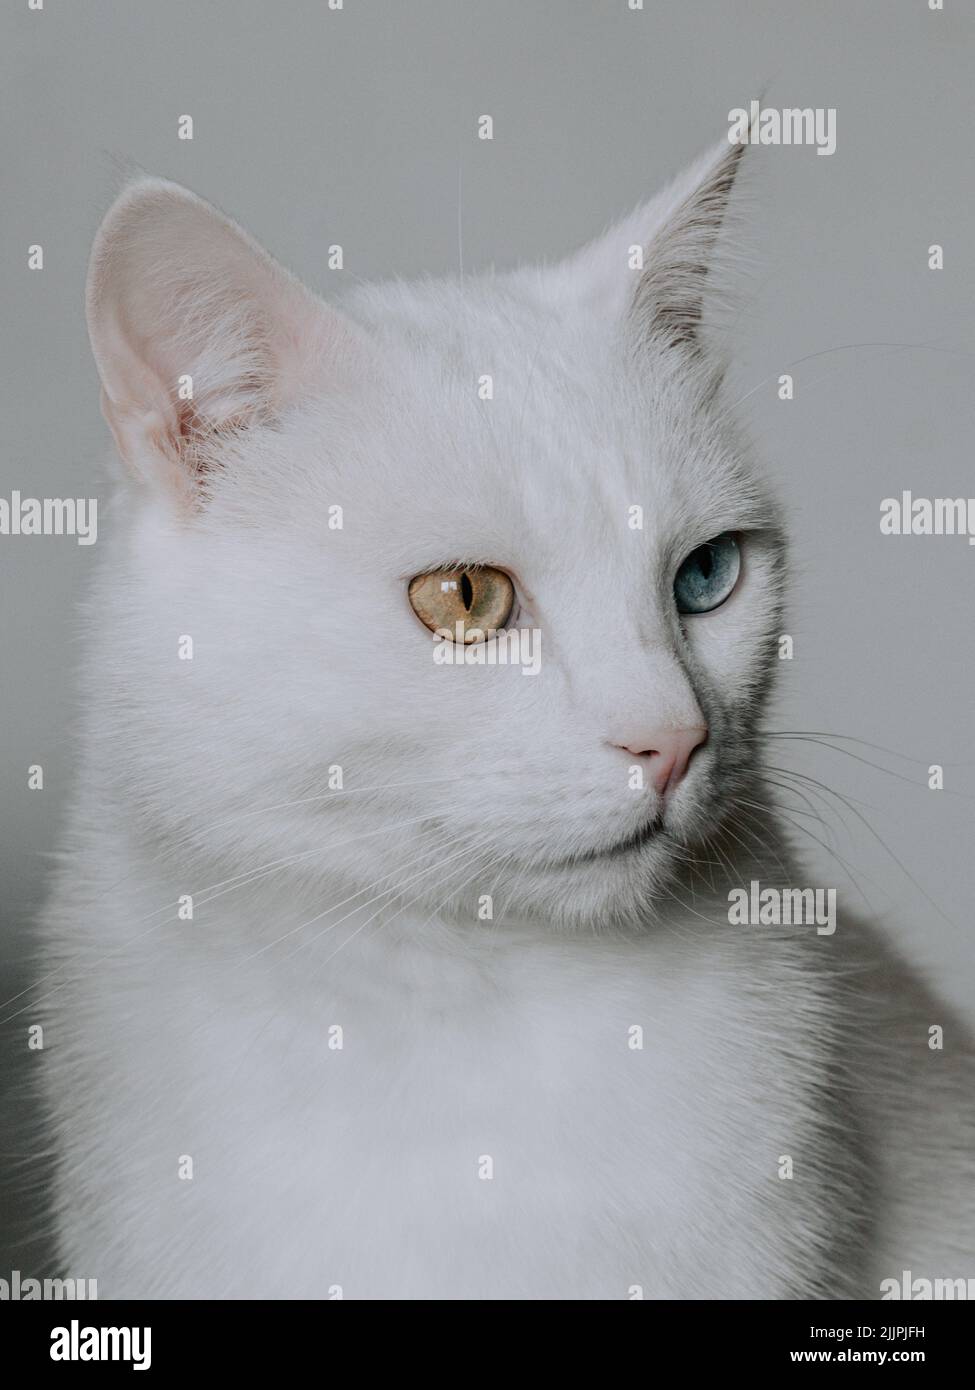 Khao manee fotografías e imágenes de alta resolución - Alamy